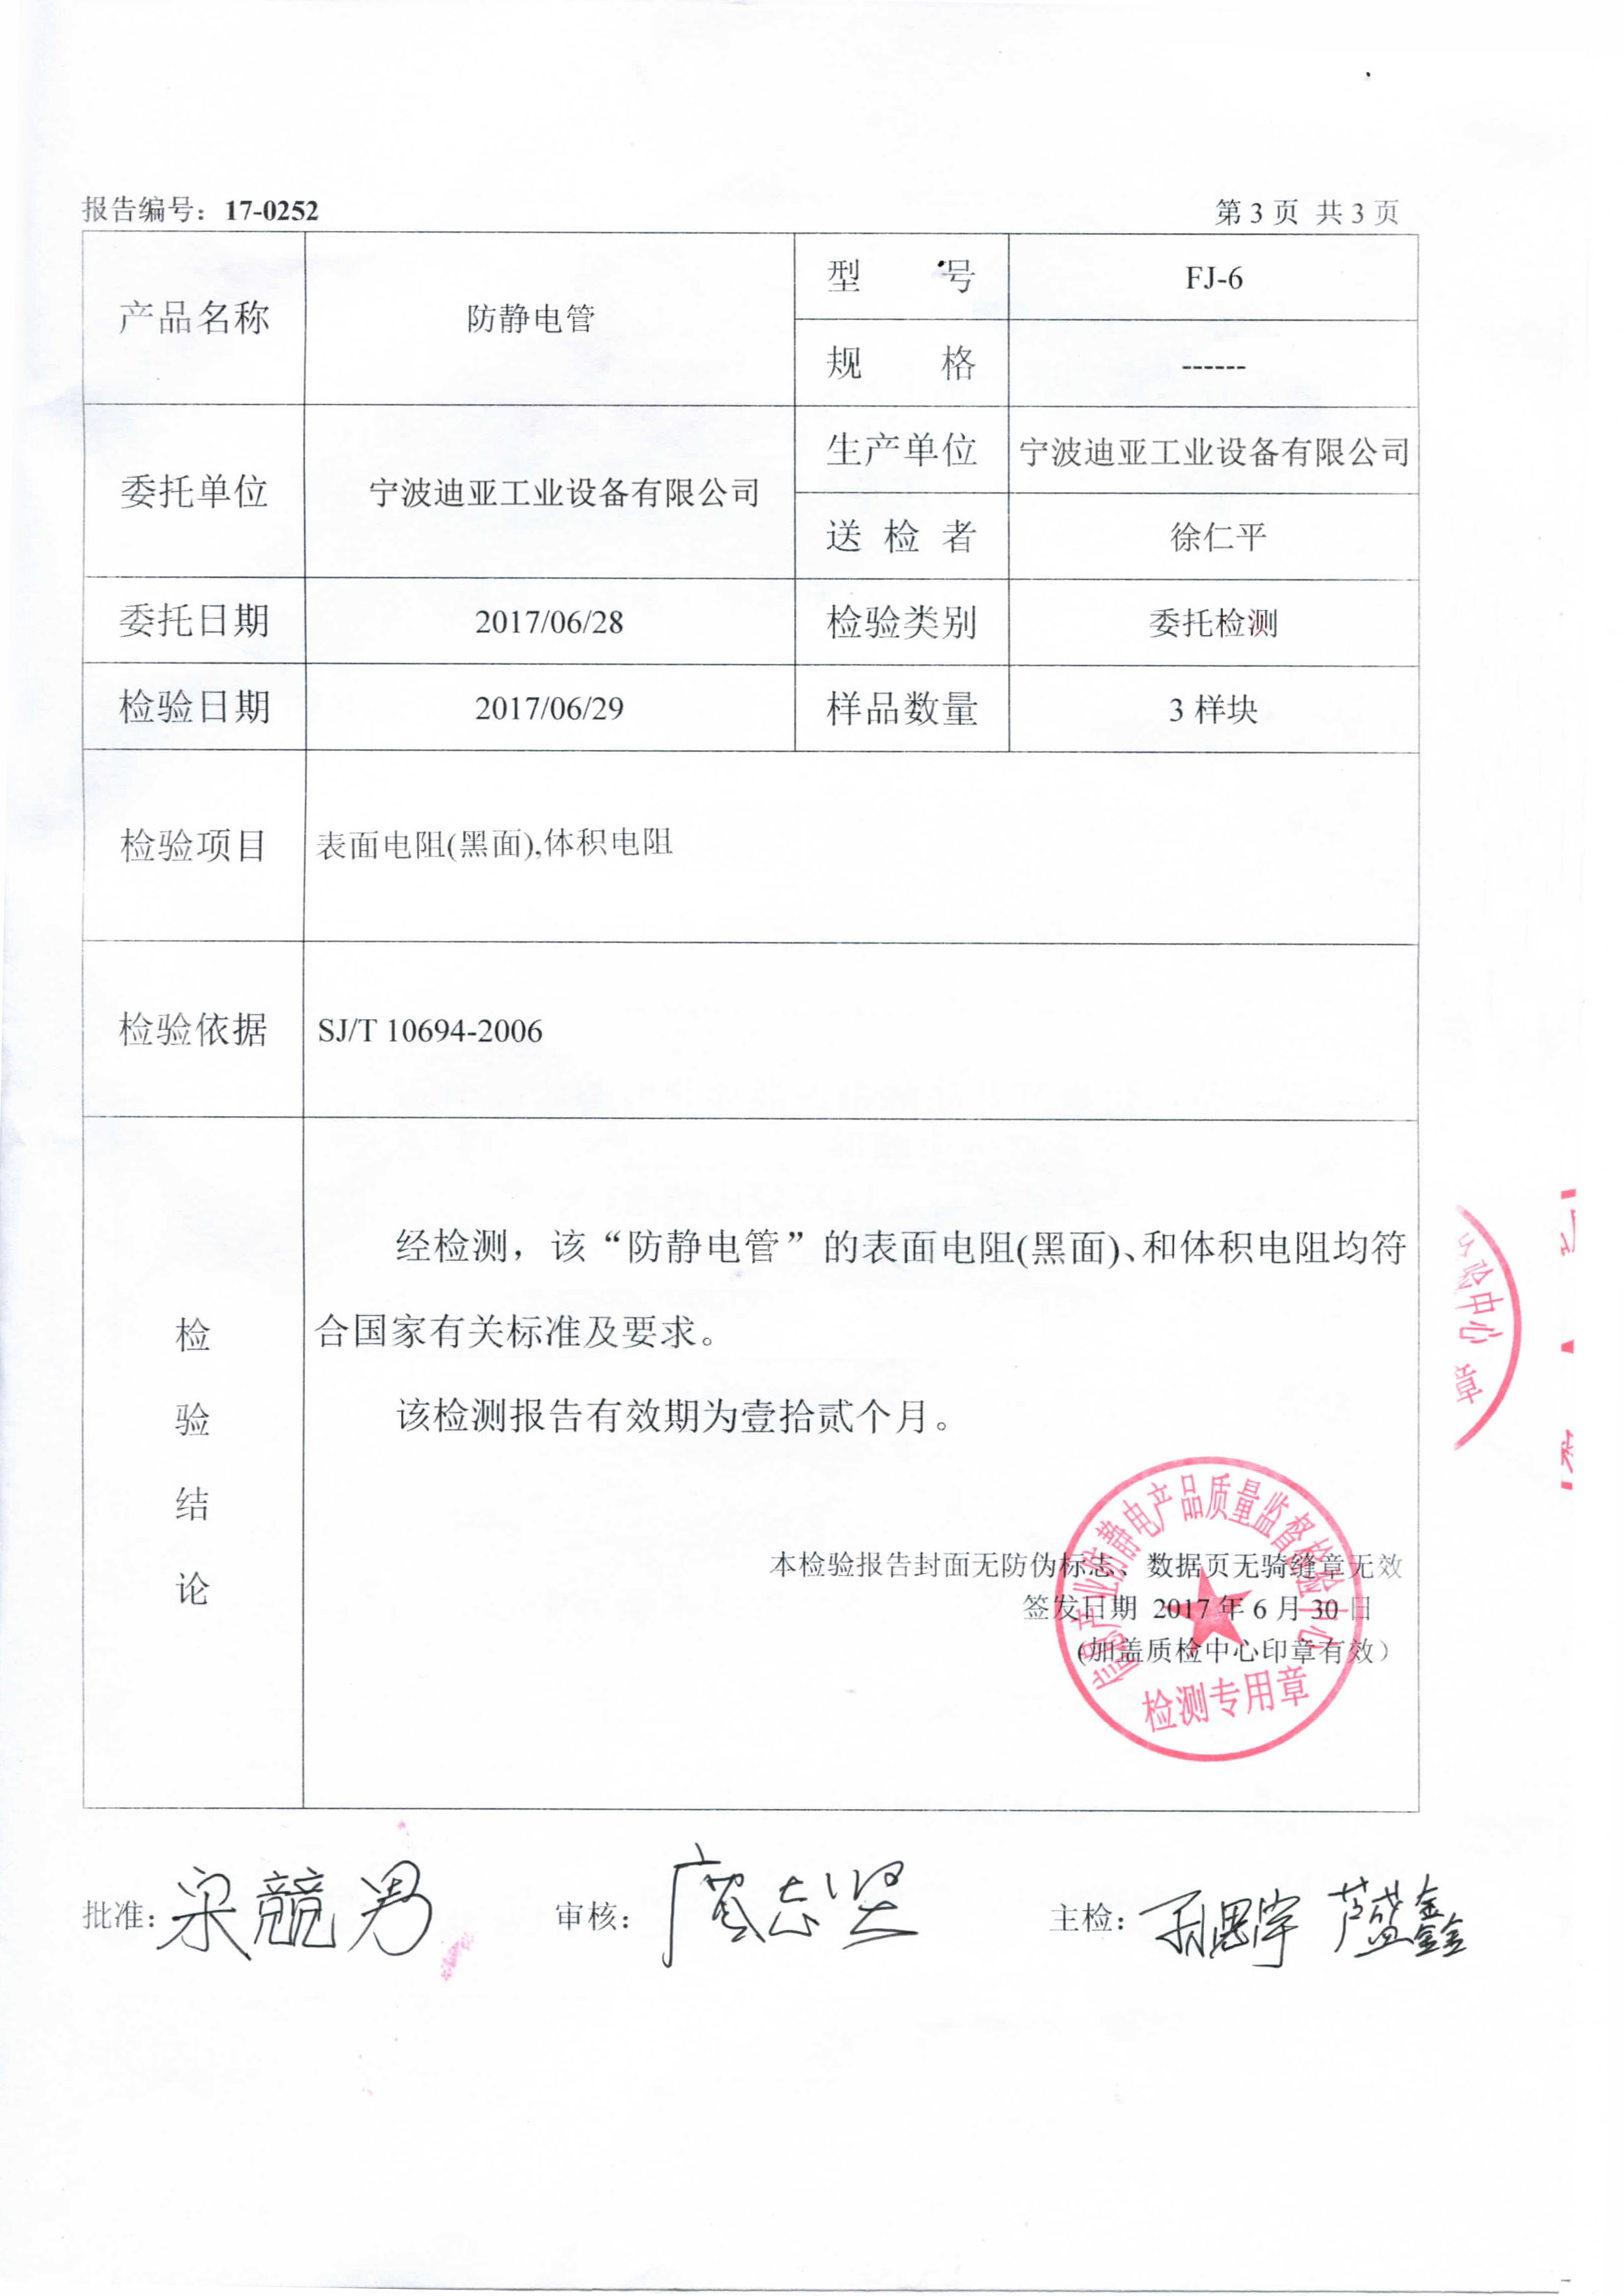 Ningbo Diya Industrial Equipment Co., Ltd. Certifications